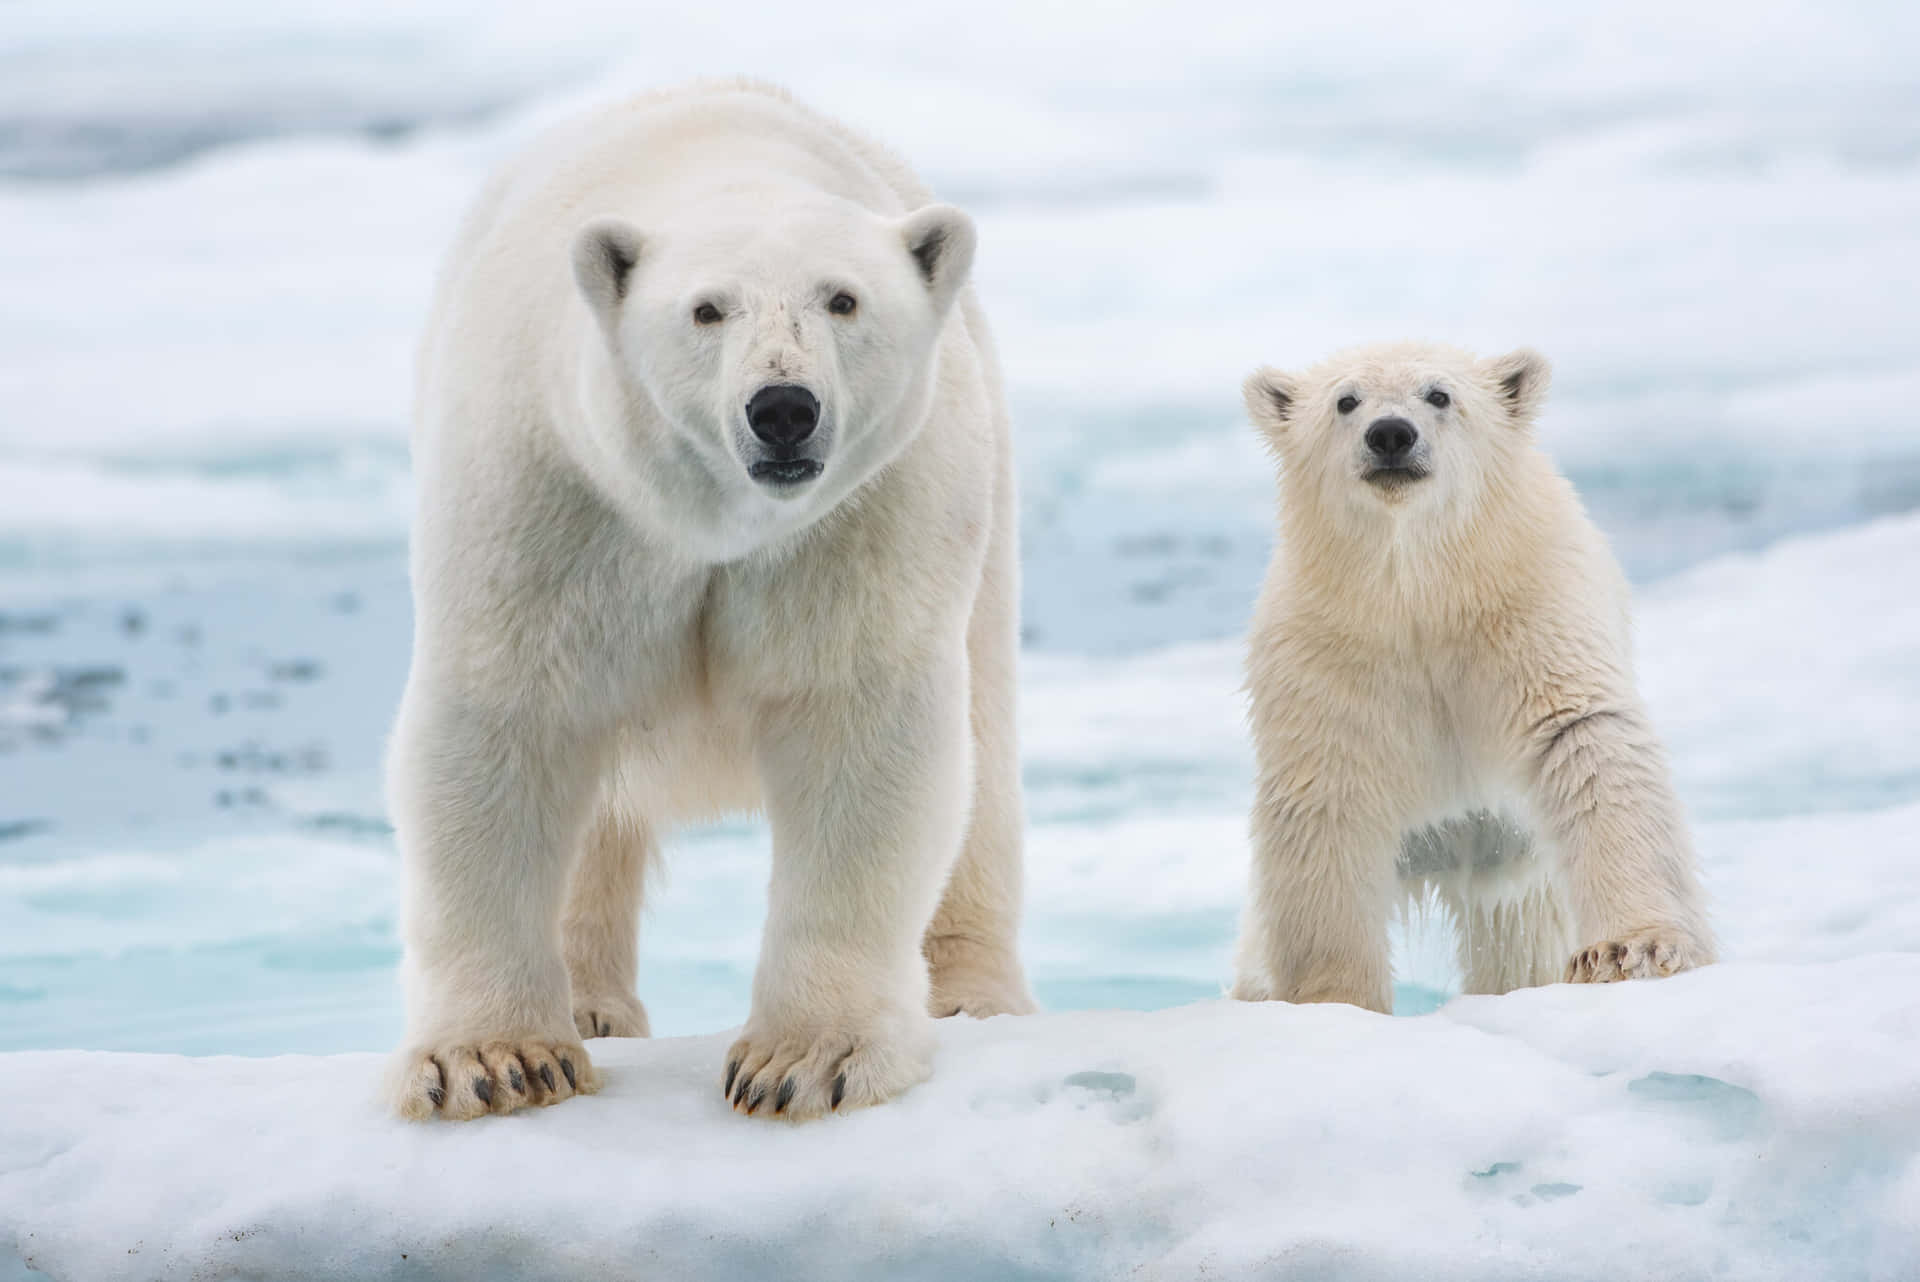 Ensmuk Isbjørn I Sit Naturlige Habitat.